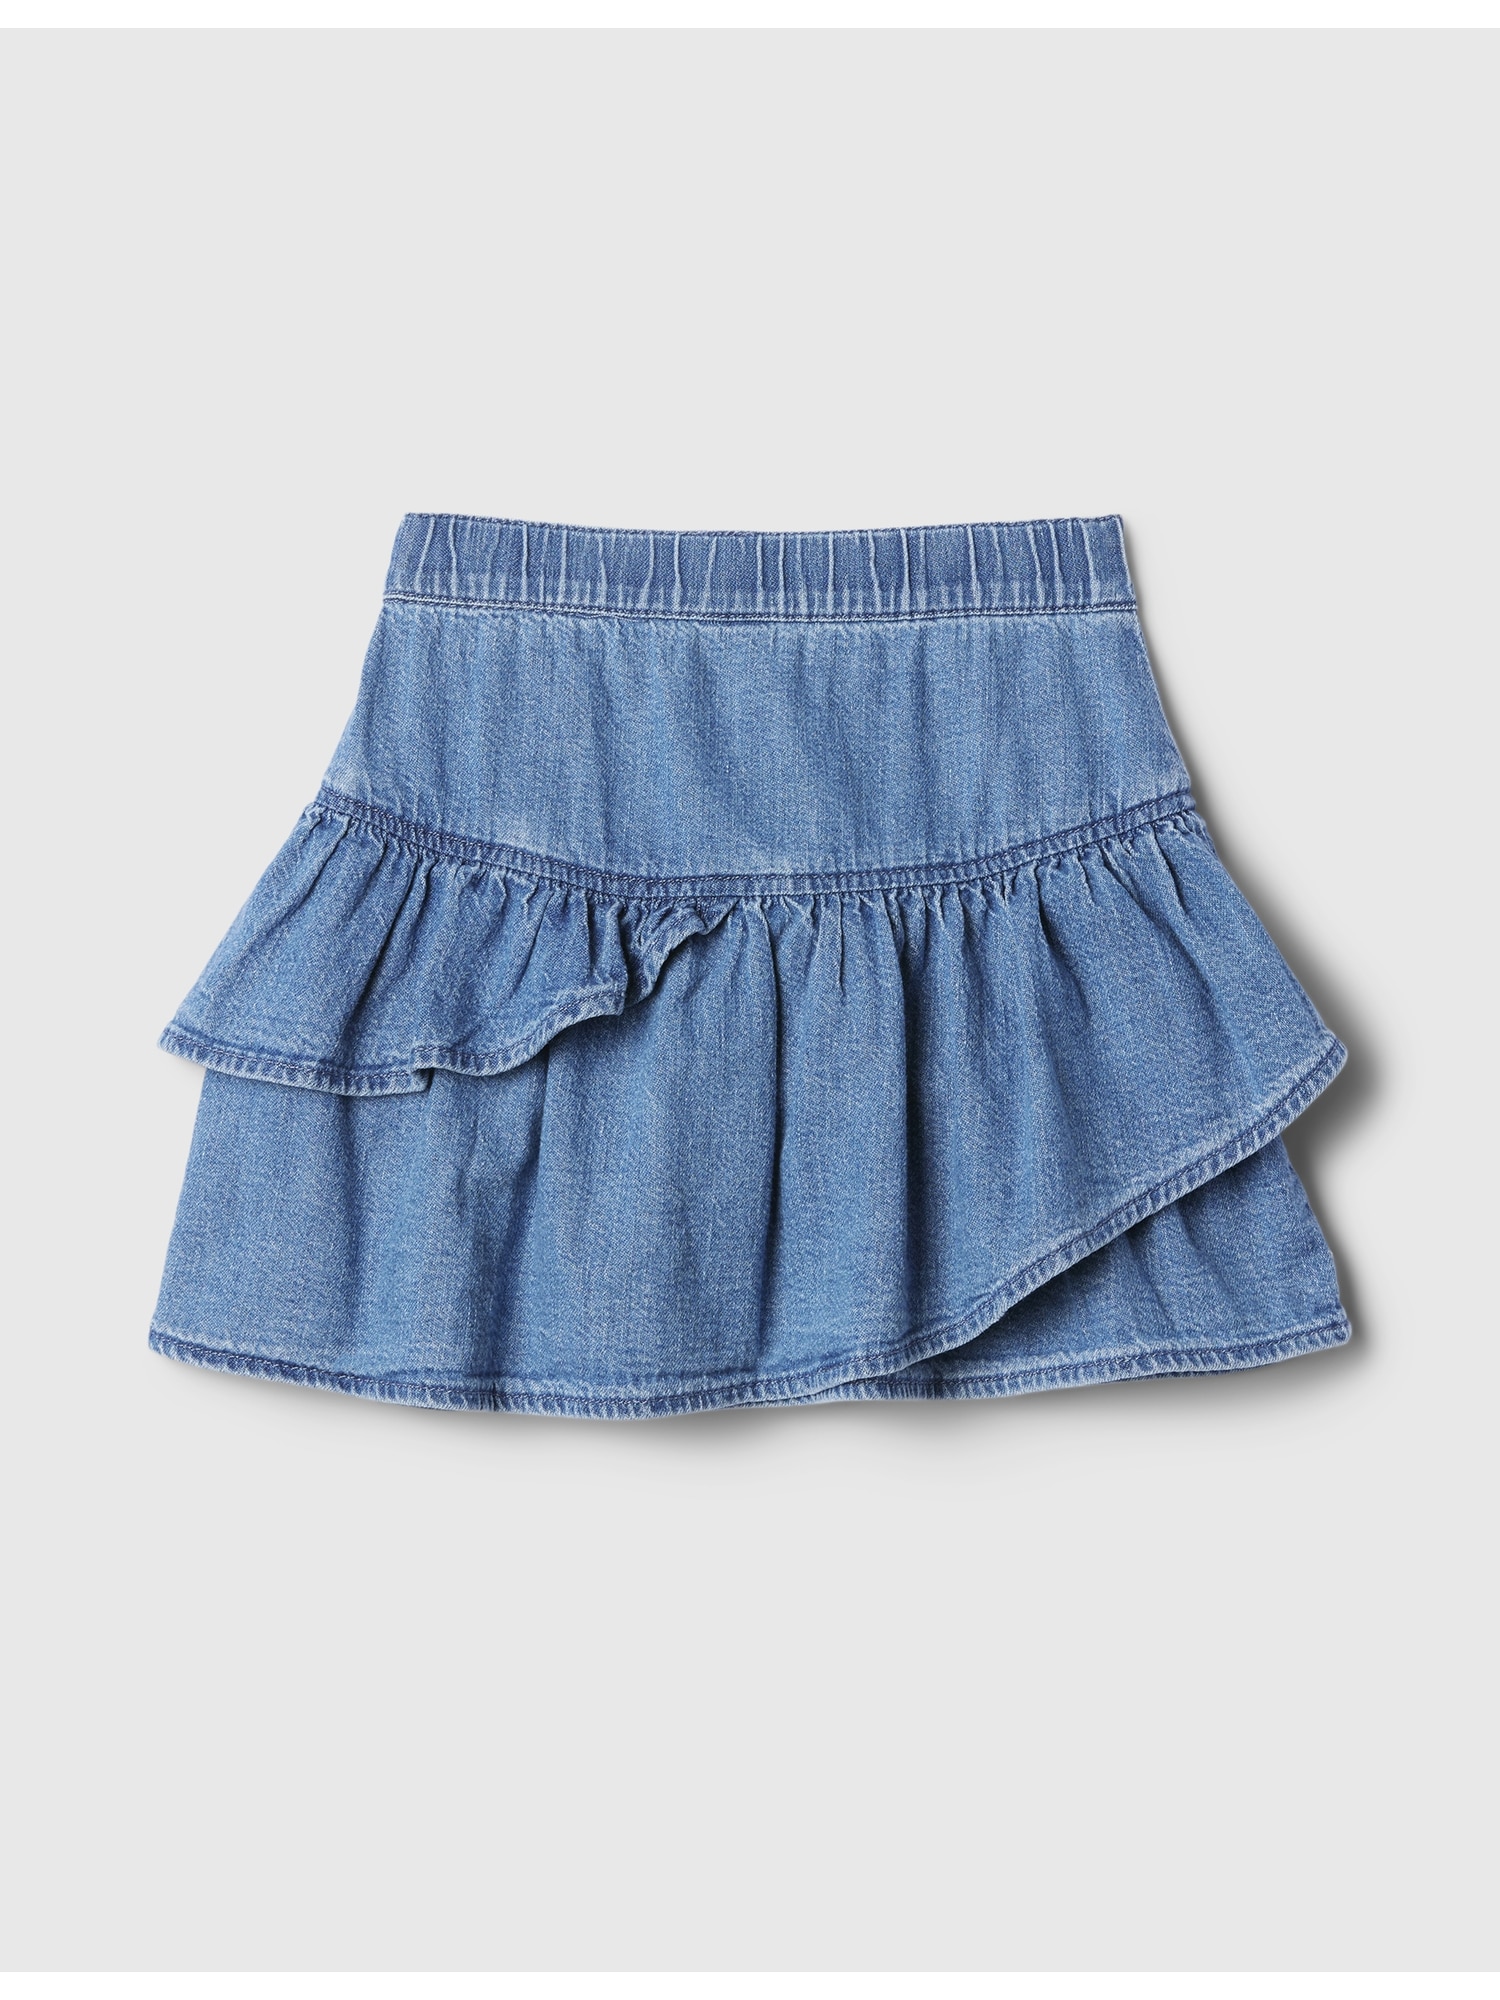 babyGap Denim Ruffle Skirt